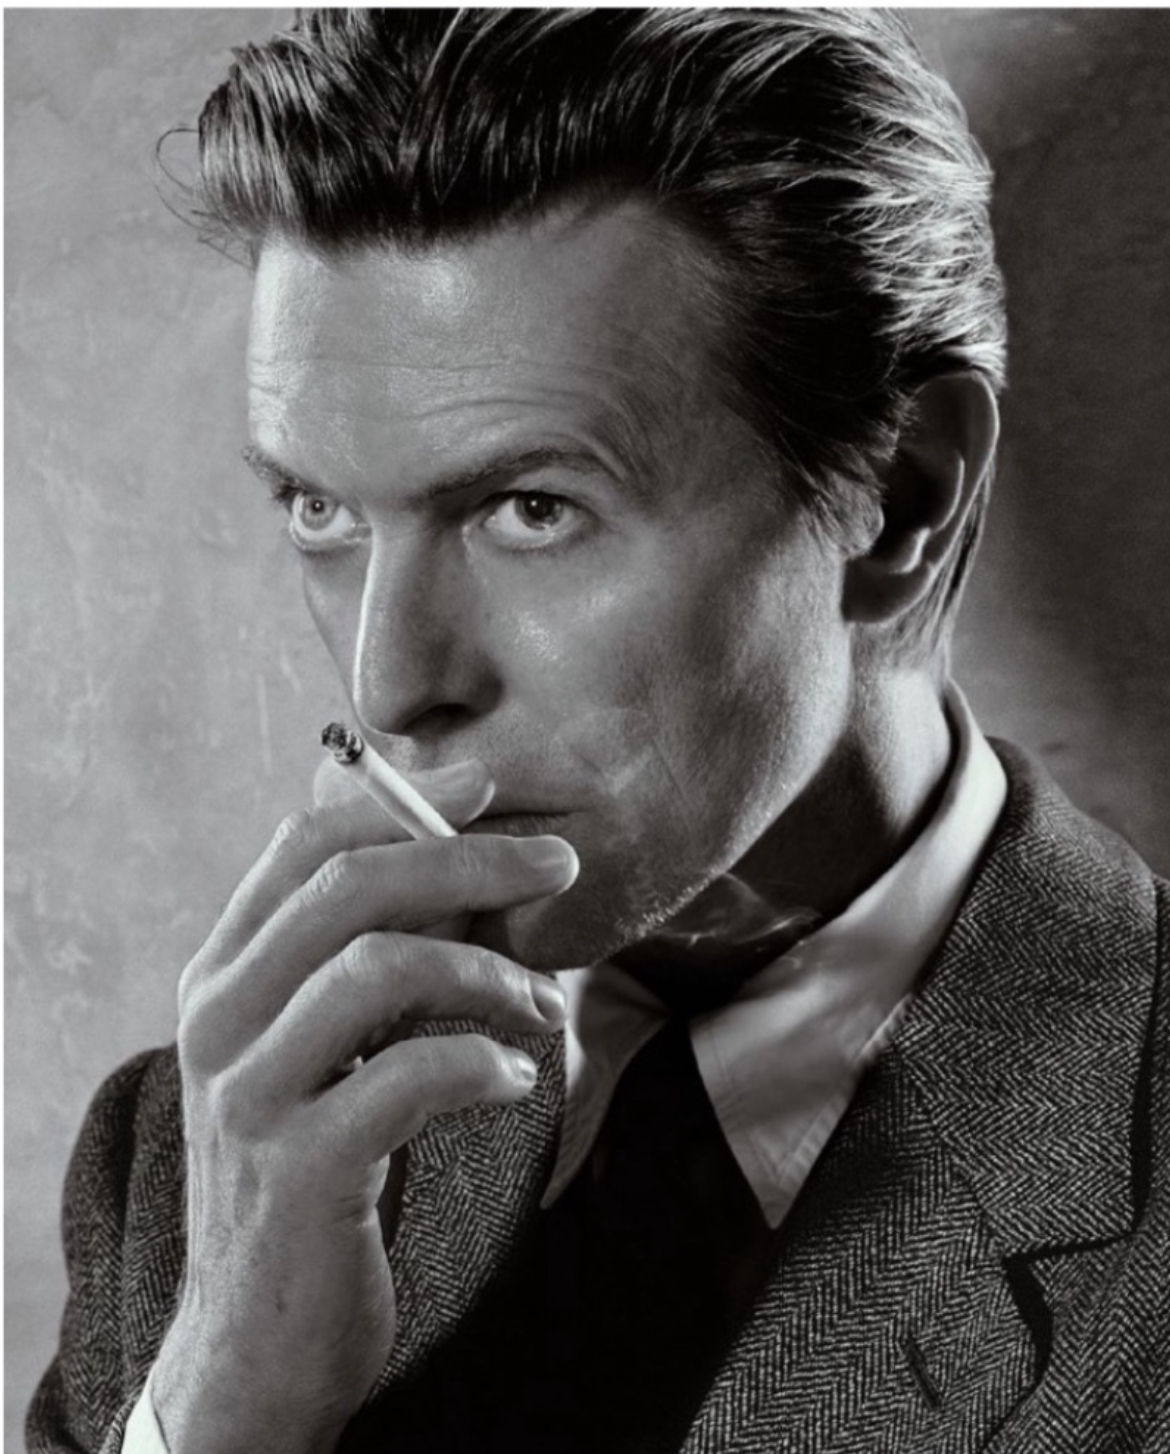 David Bowie in Markus Klinko's photograph 